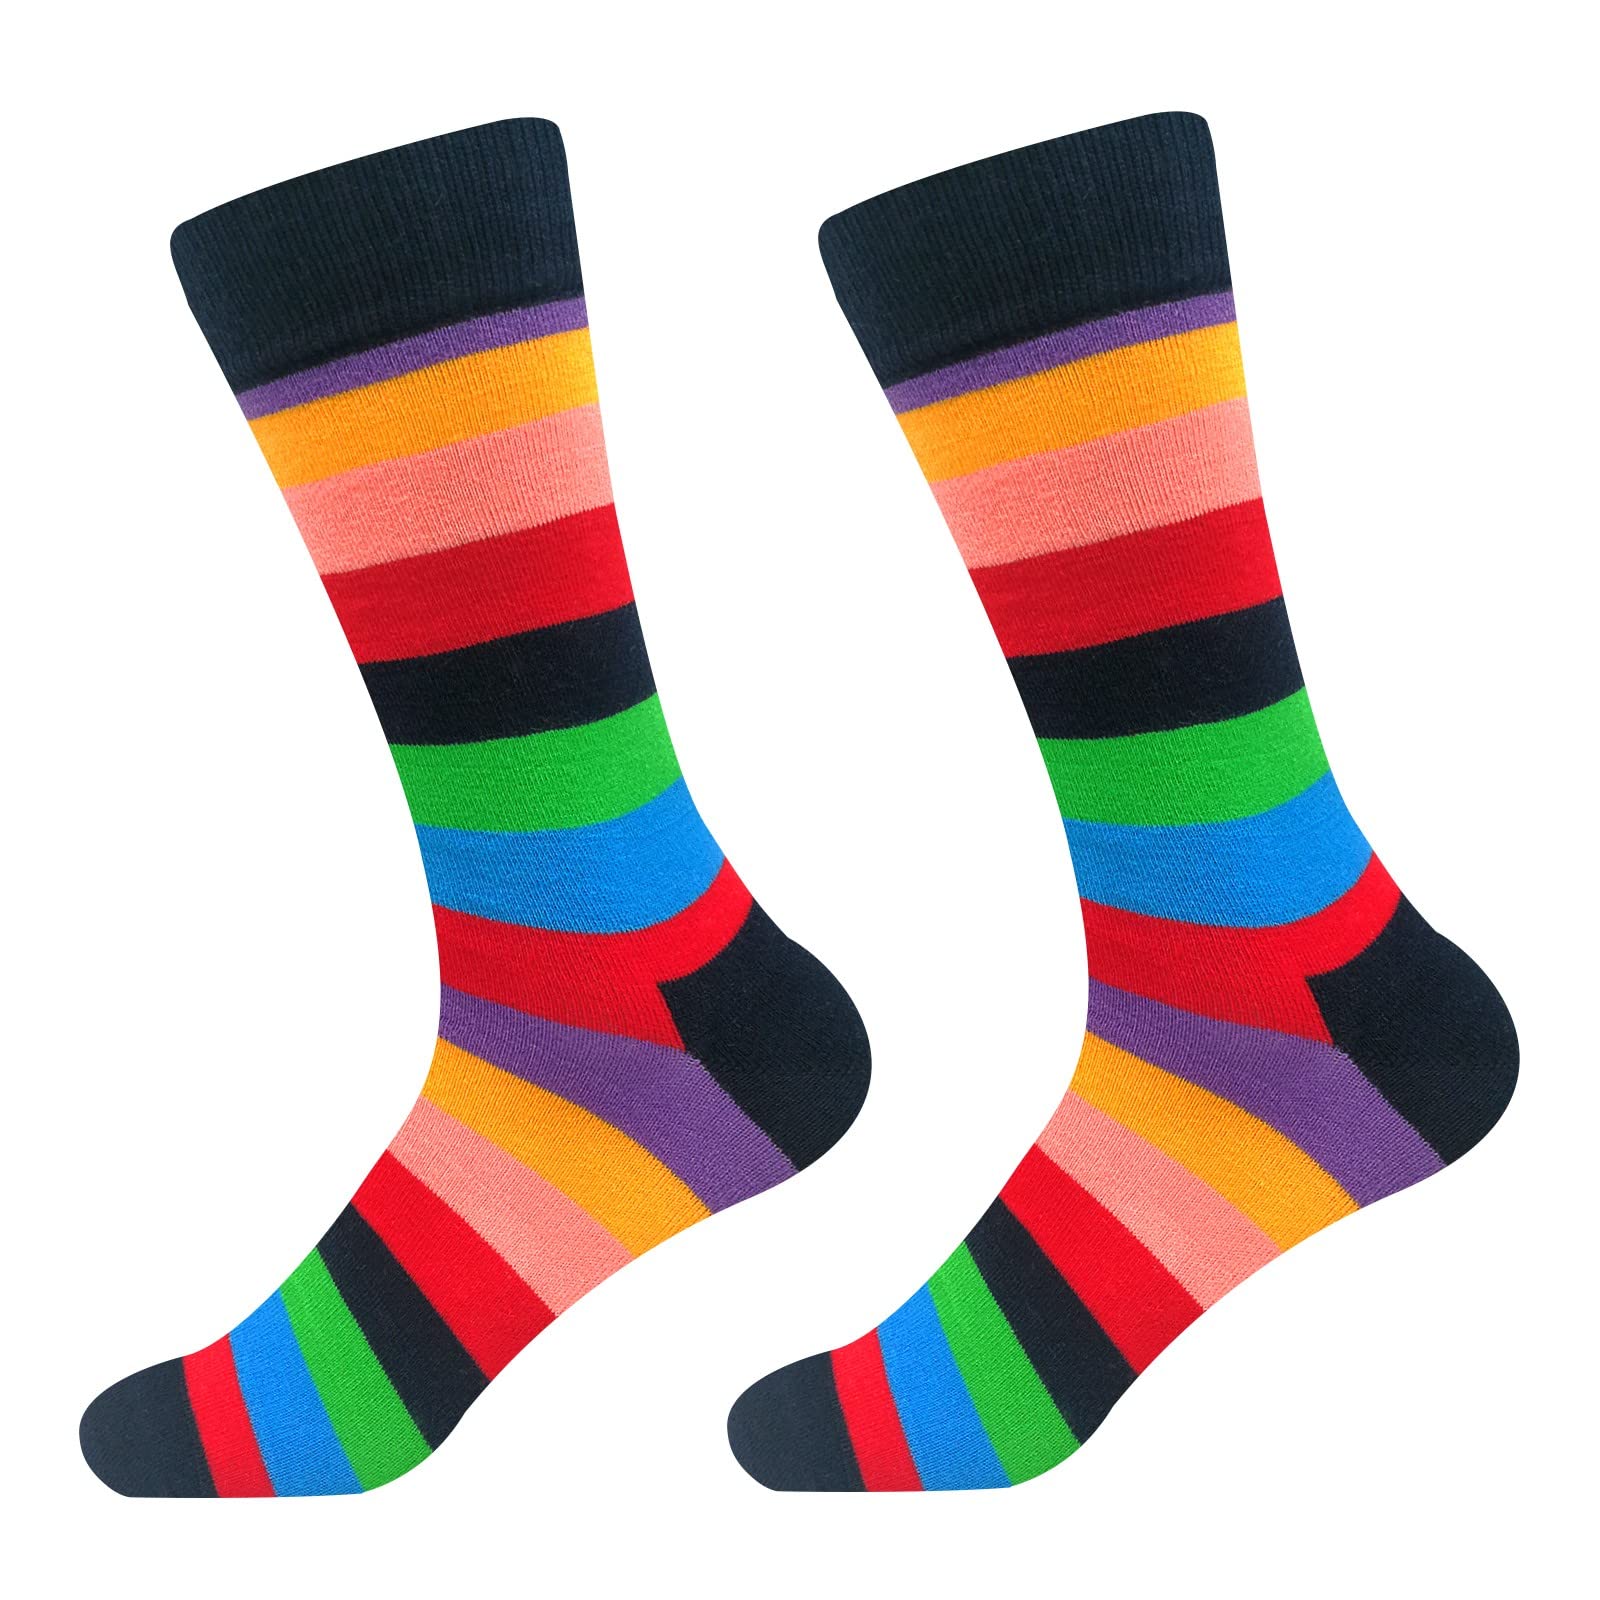 Fasefunn Men's Striped Socks Fun Colorful Novelty Crazy Patterned Dress Socks Cotton Calf Packs